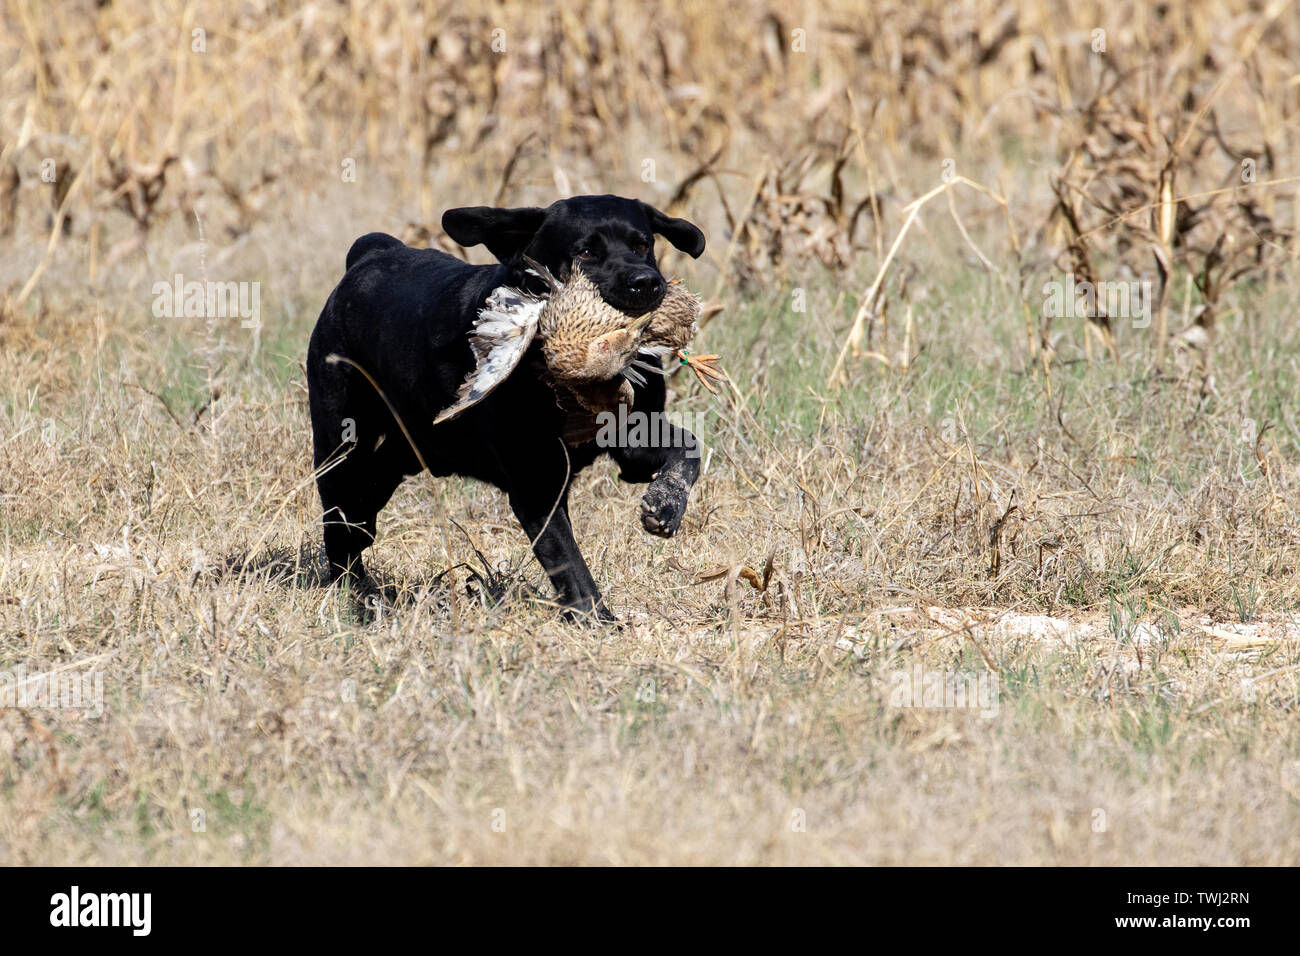 Labrador retriever with a duck during a field duck retrieving test Stock Photo